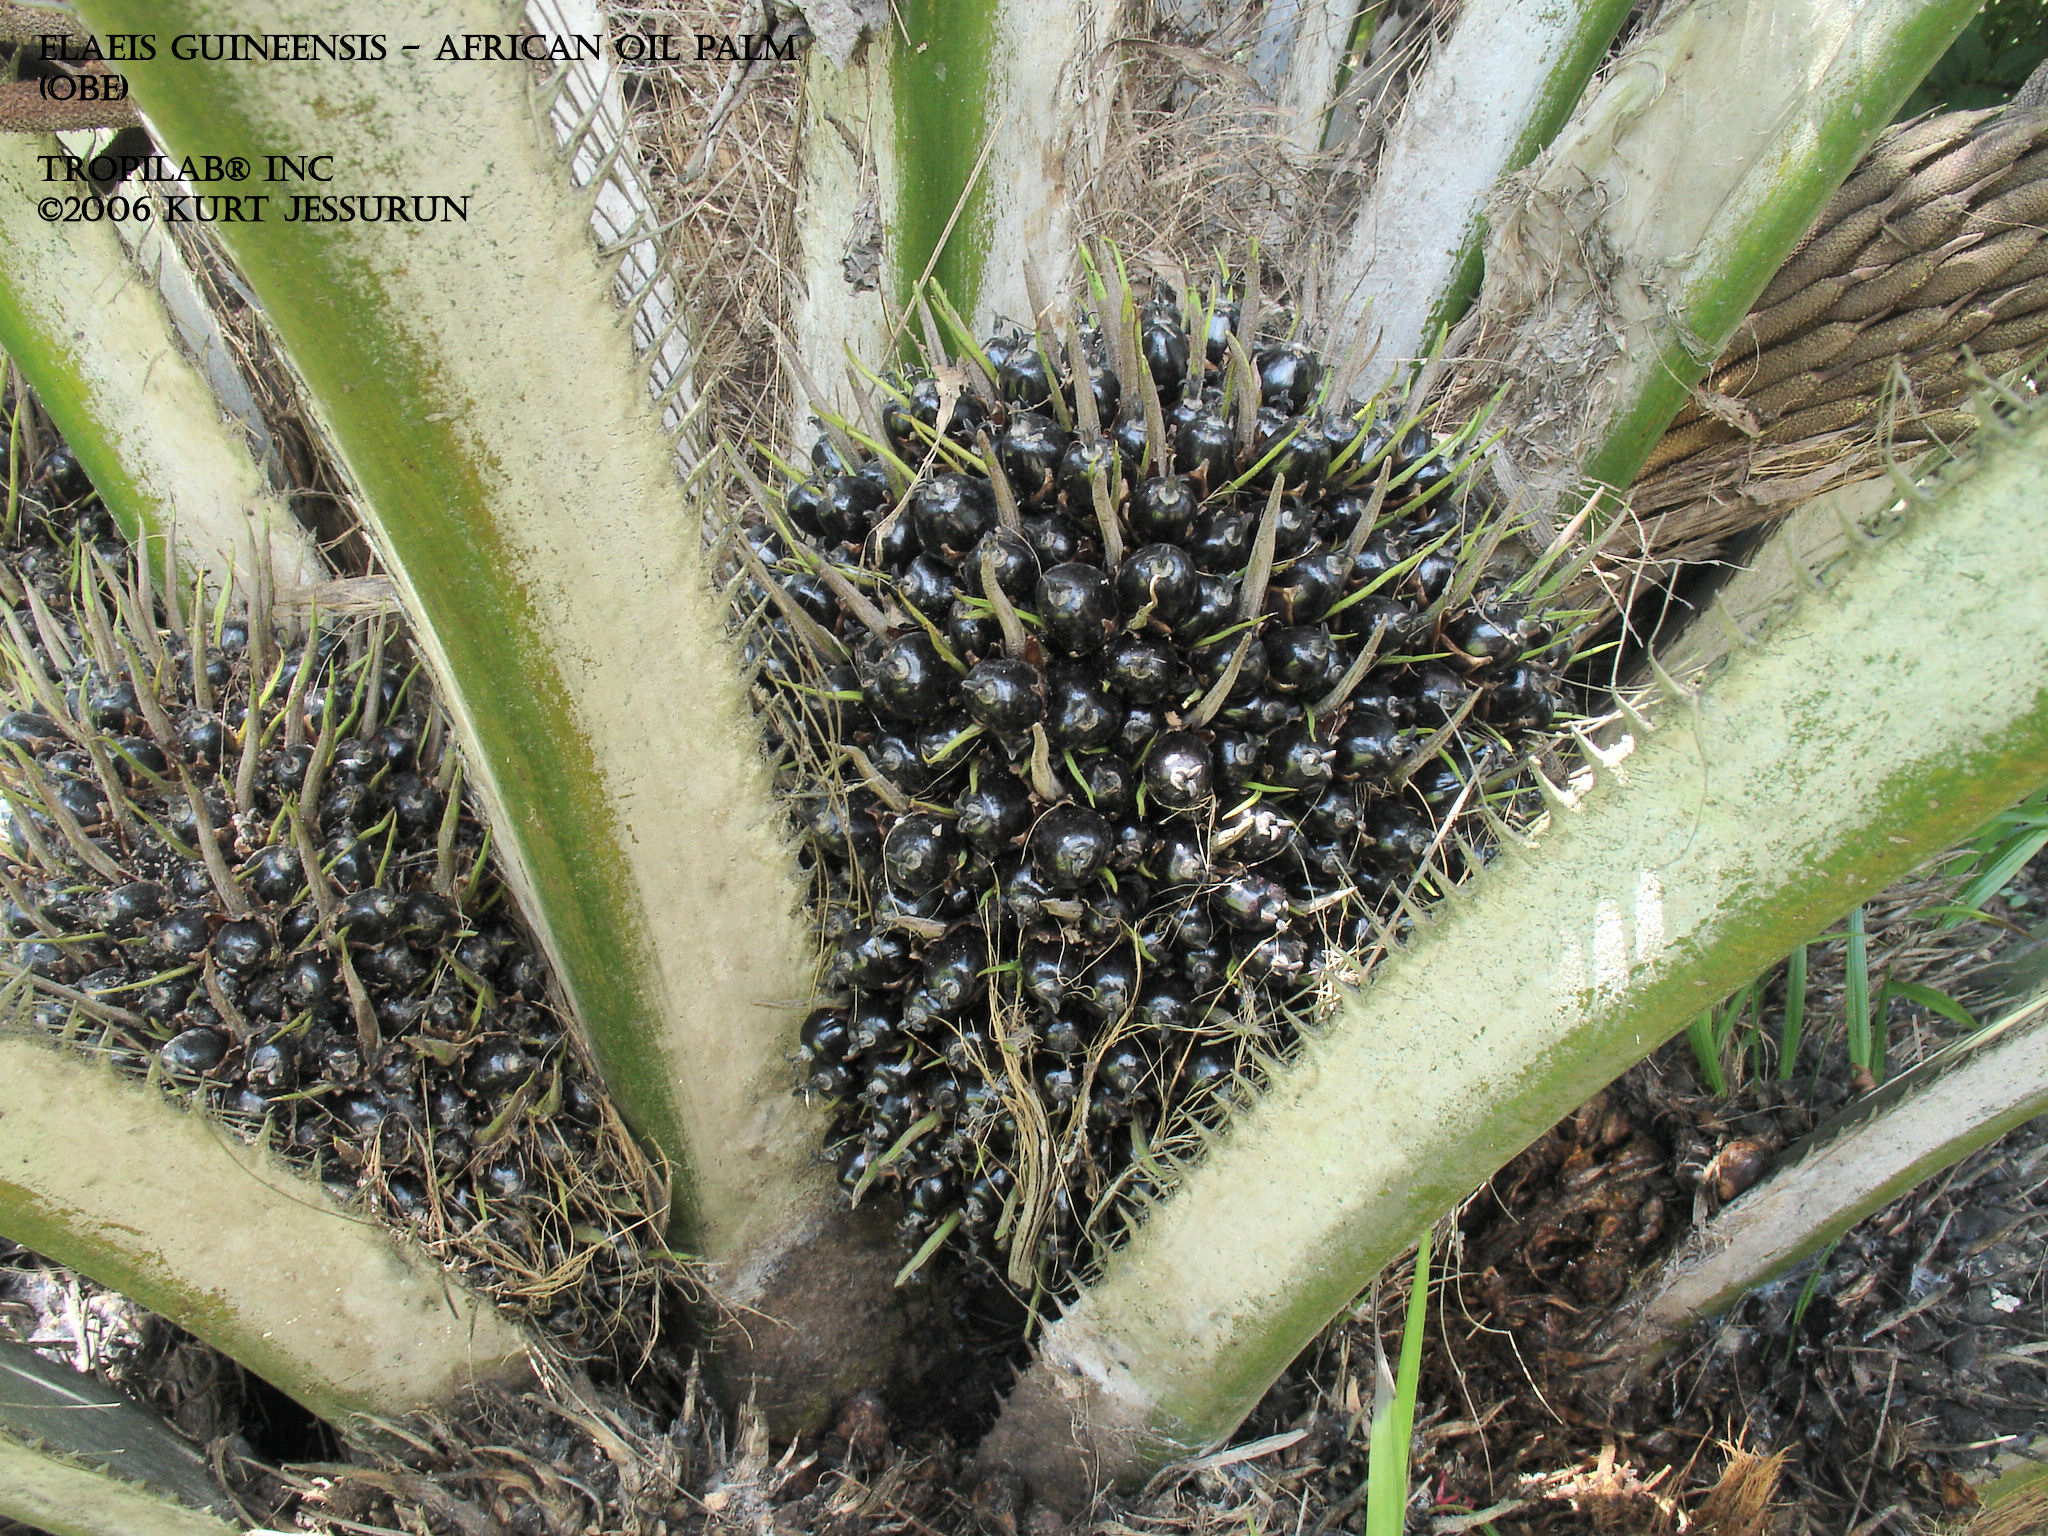 Elaeis guineensis - Obe palm fruits